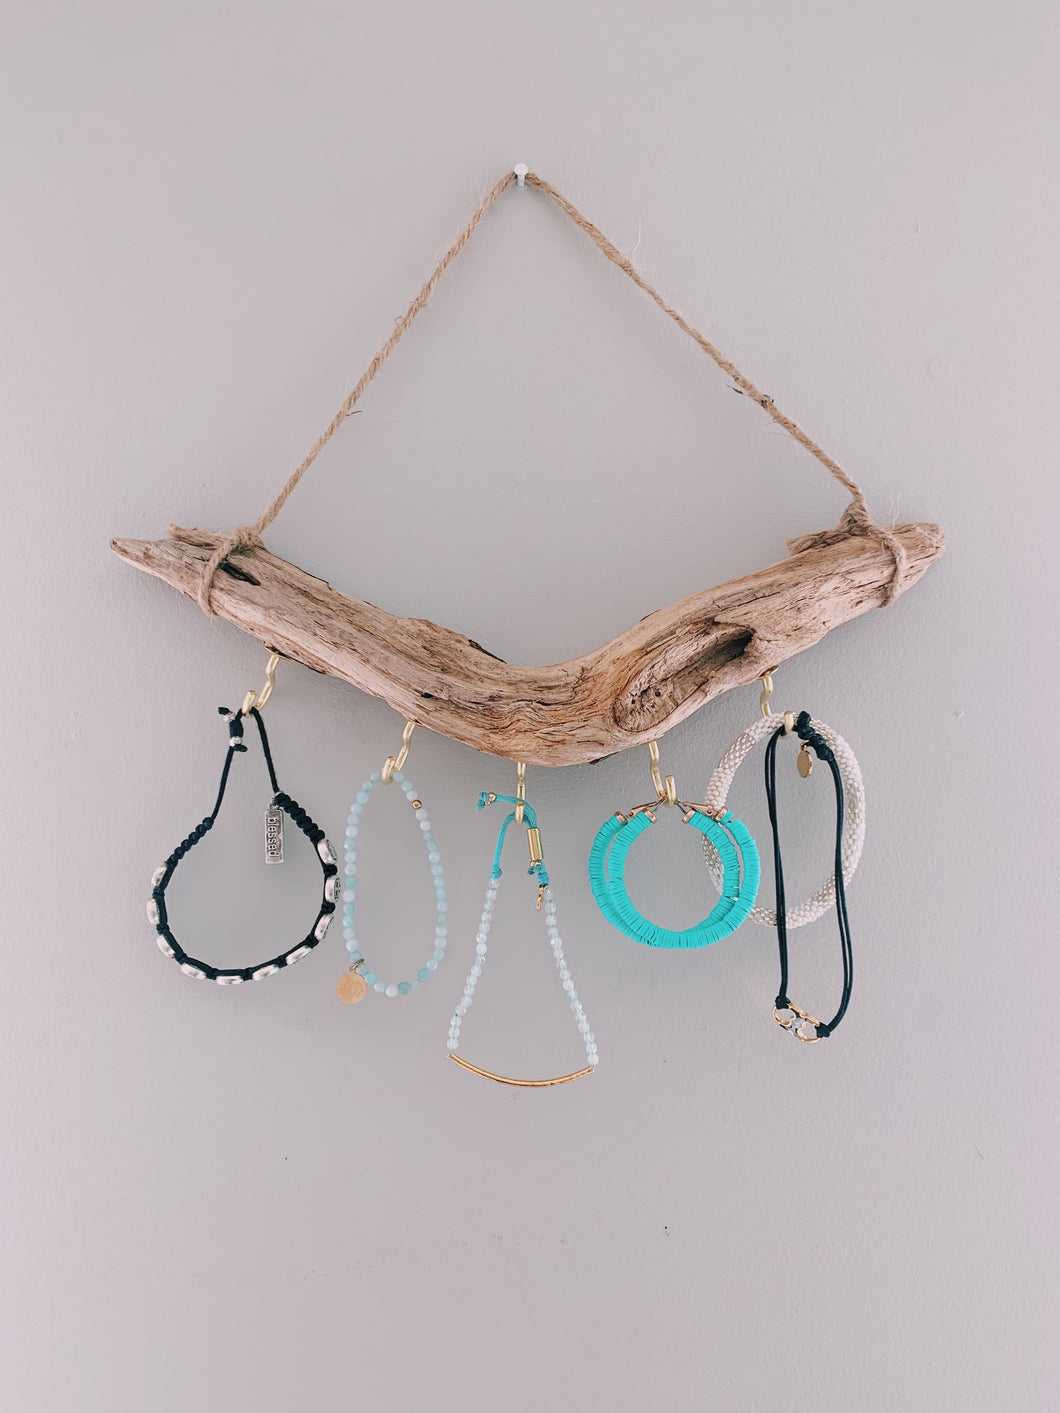 Driftwood jewelry hanger